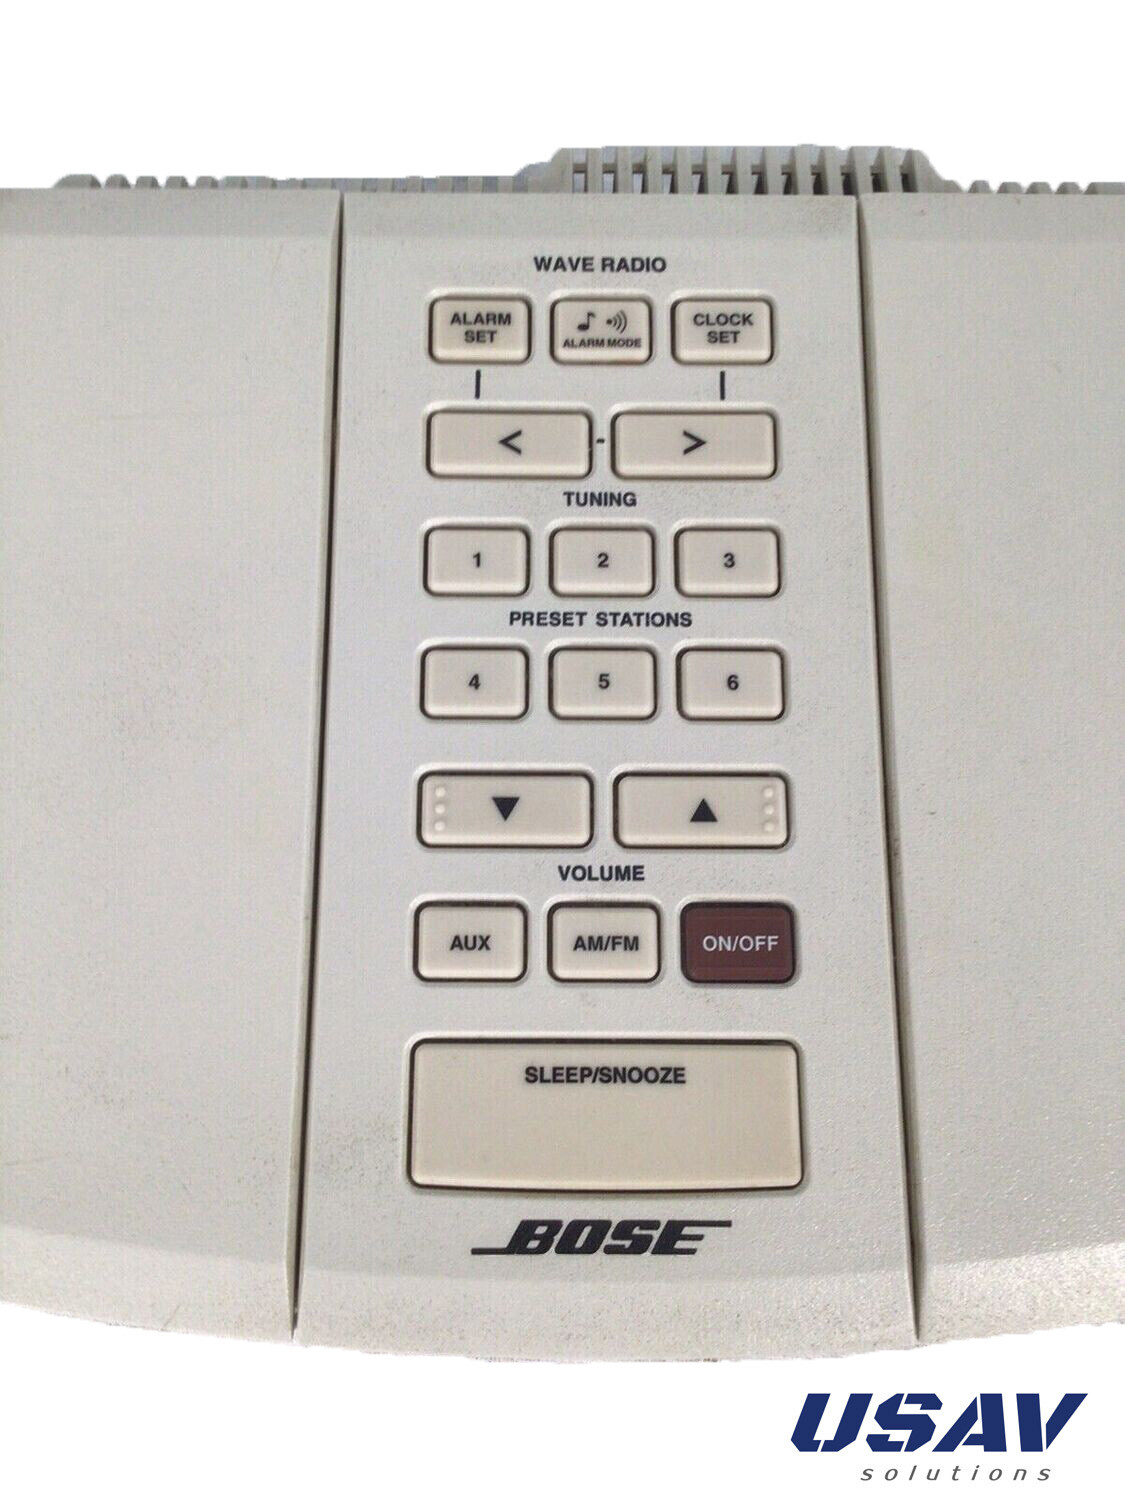 Top Control Panel Key Pad
For Bose Wave Radio